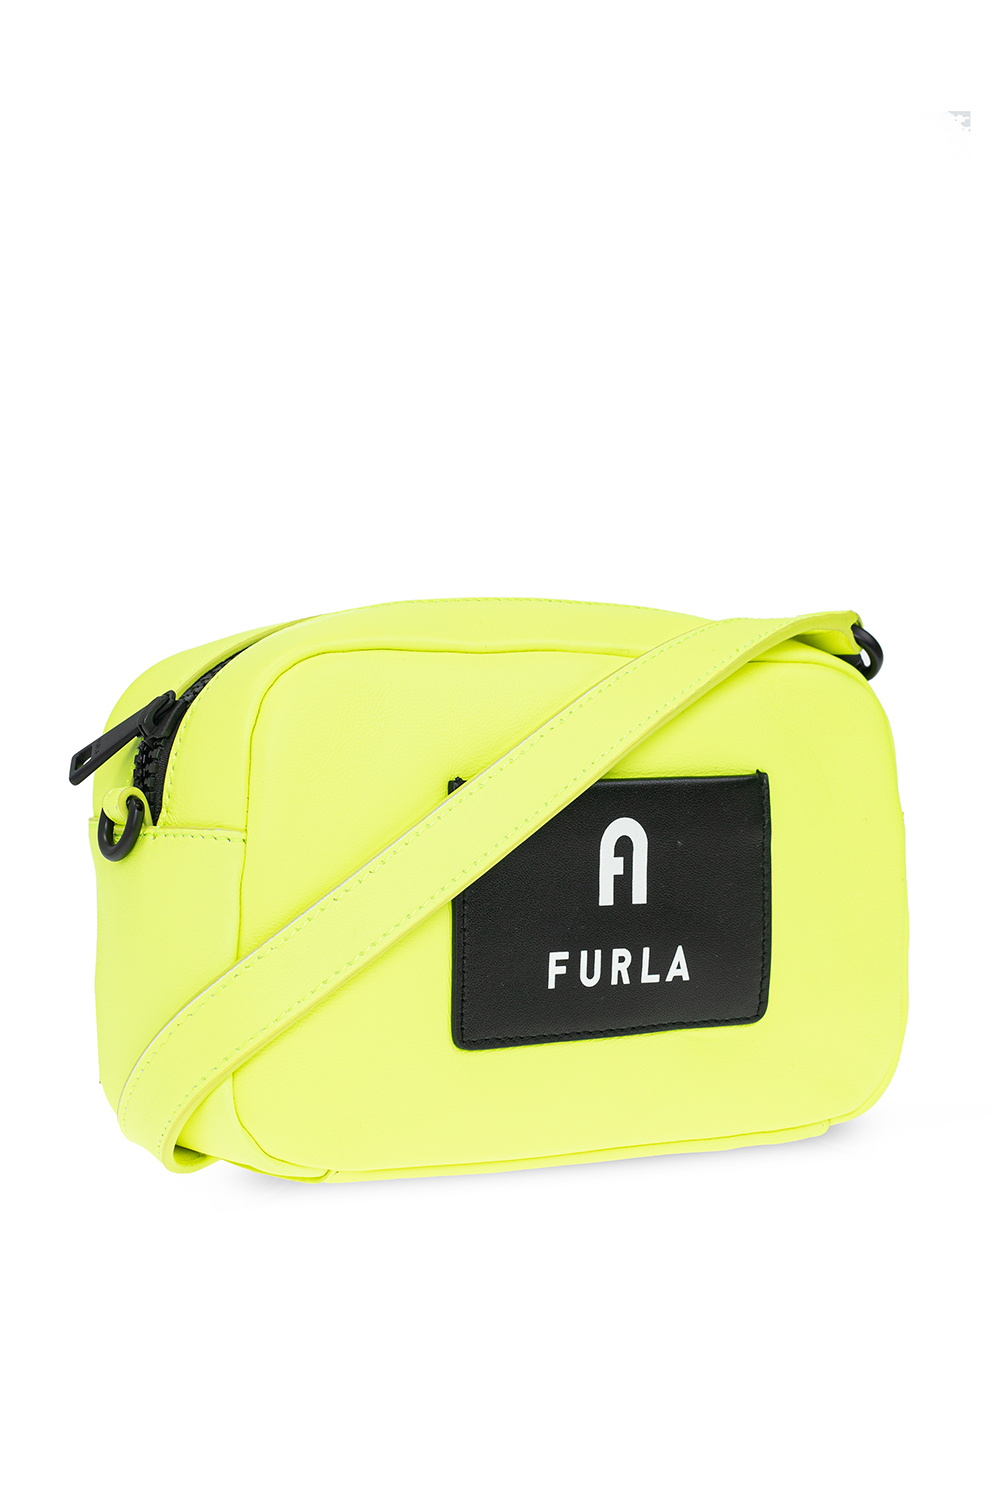 Furla ‘Iris Mini’ shoulder bag